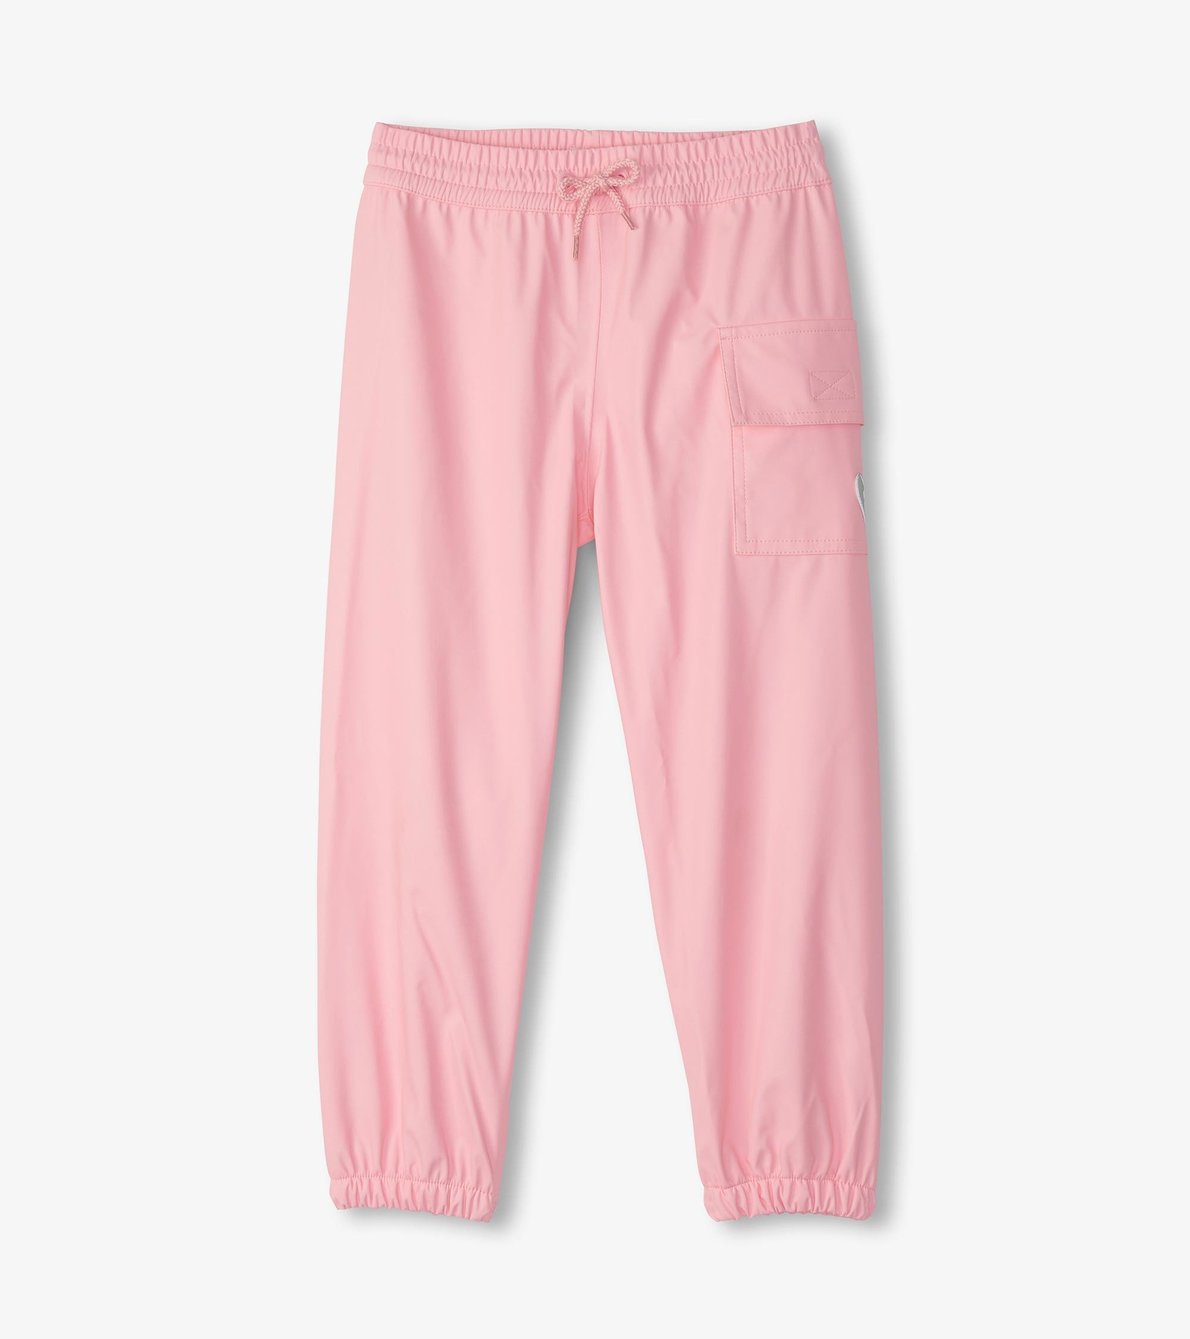 View larger image of Classic Pink Splash Pants